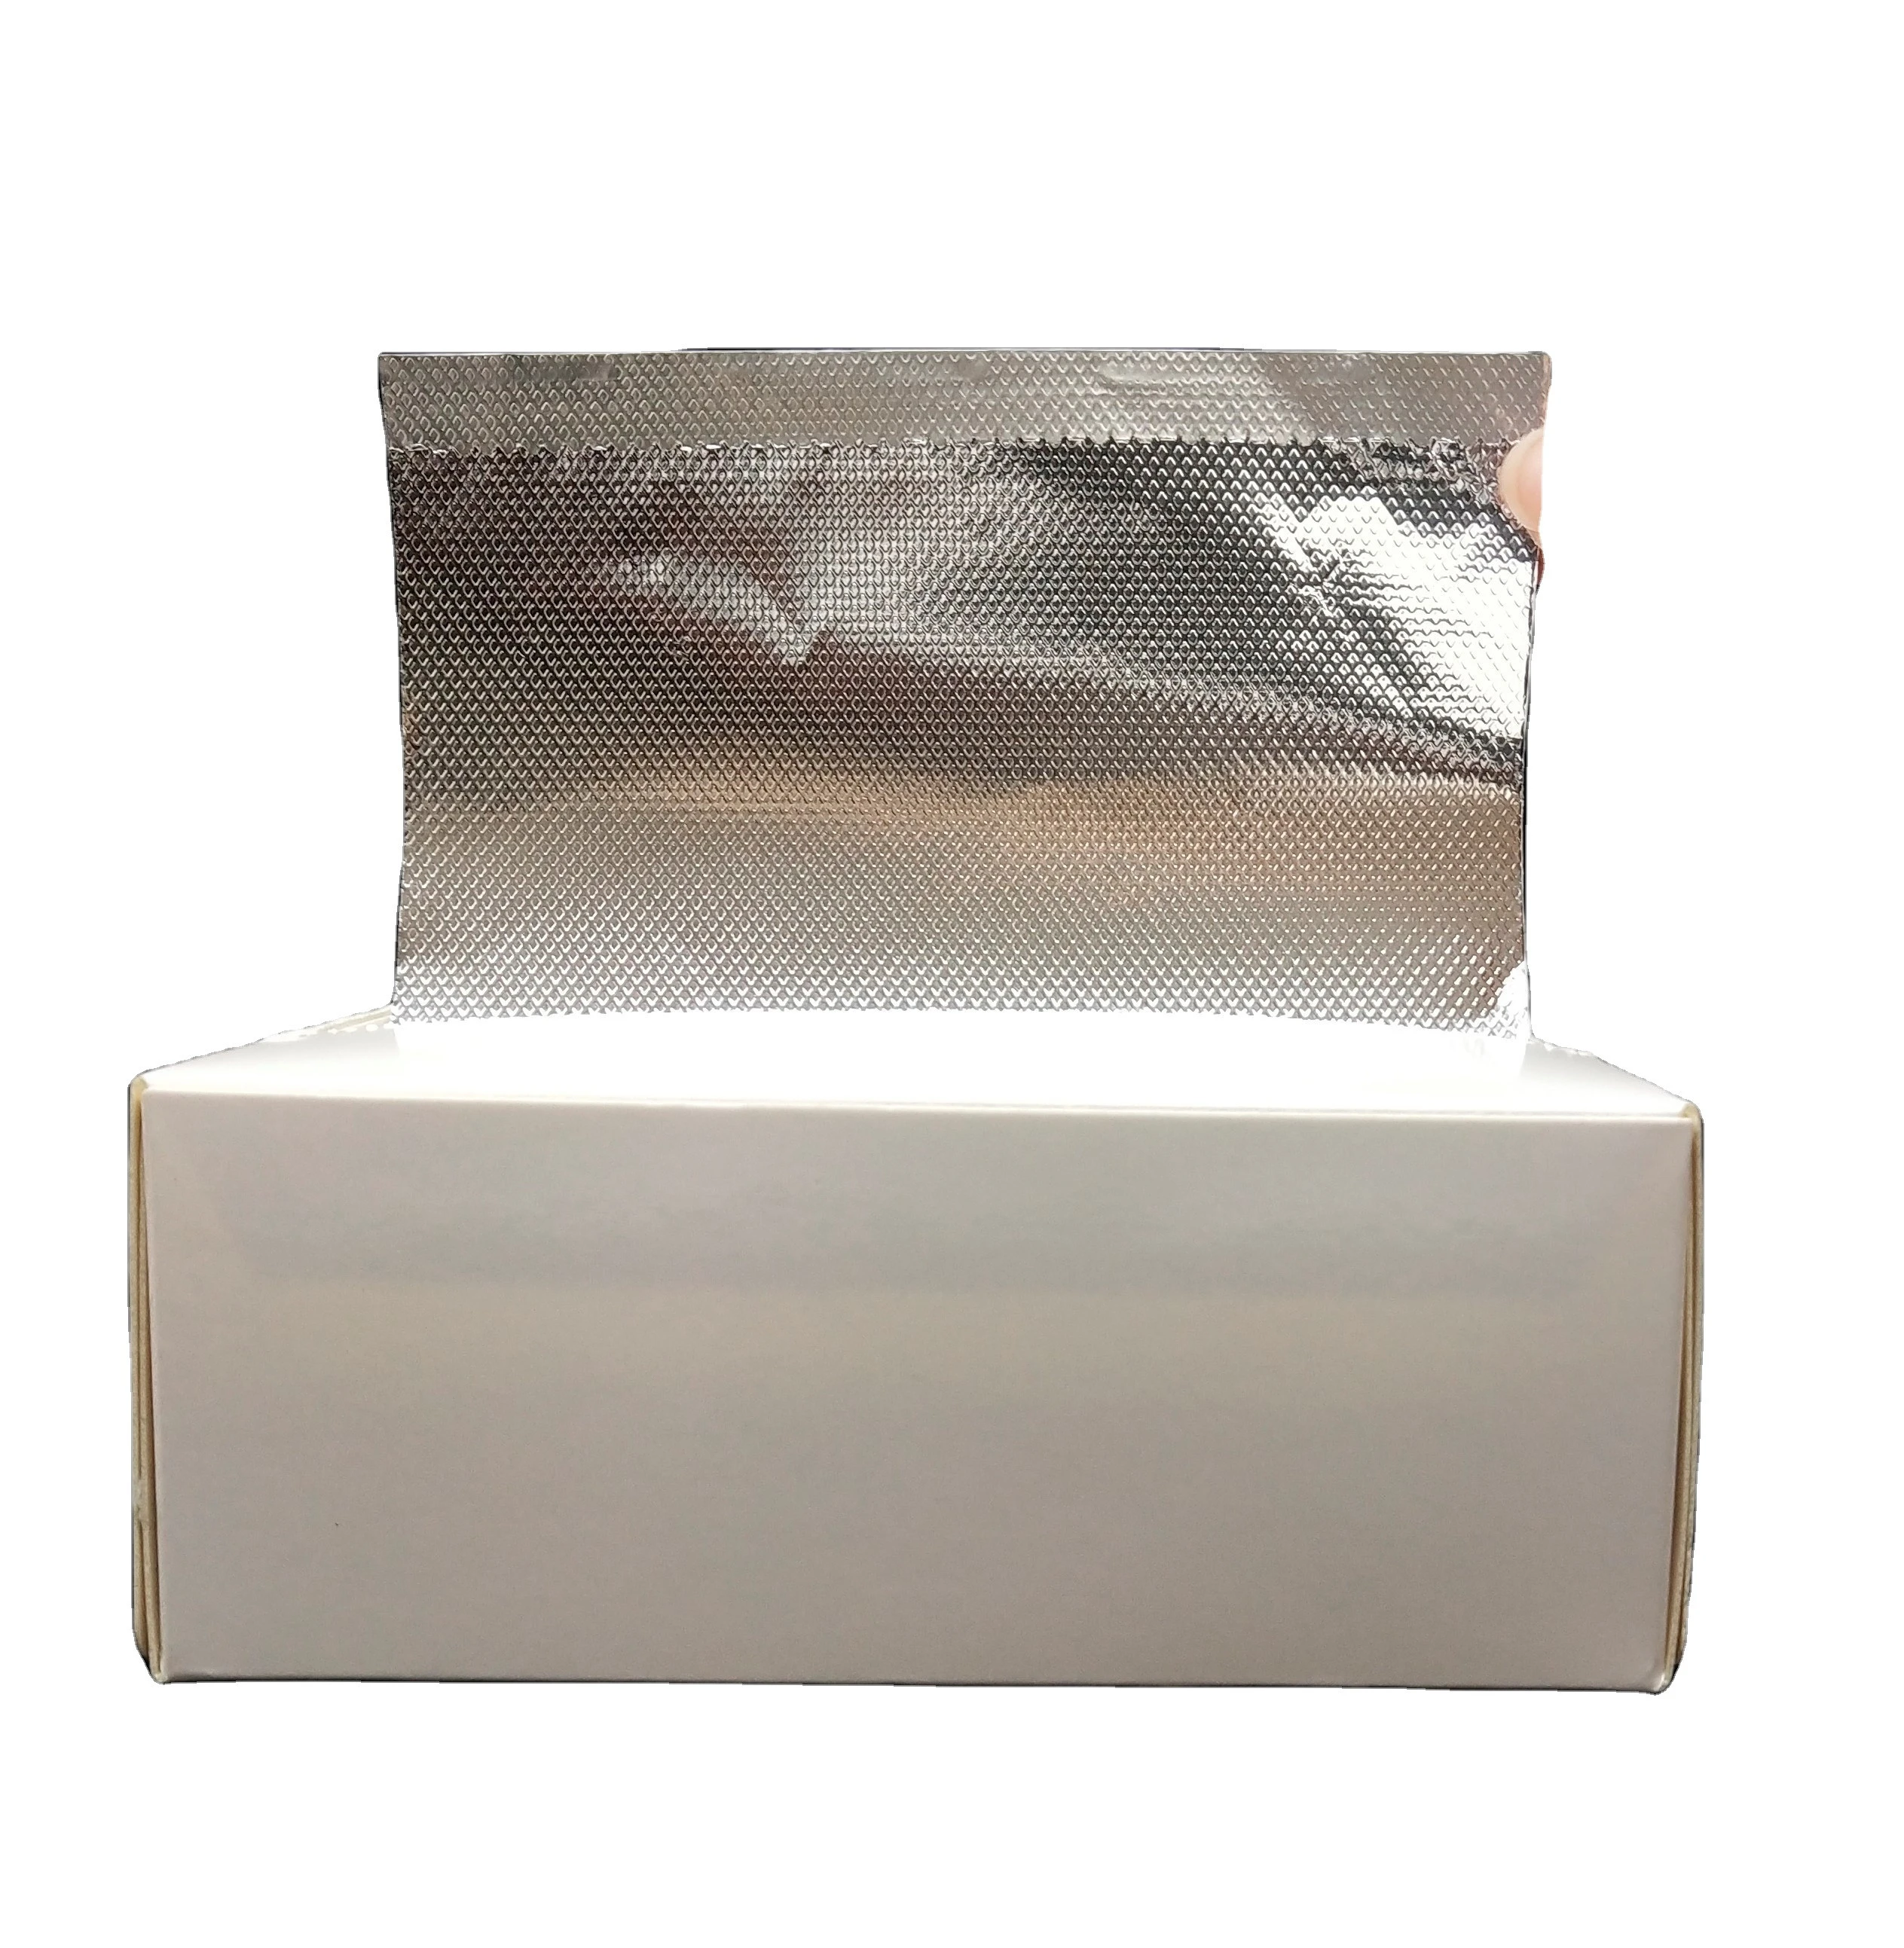 Factory Quality Hairdressing tissue aluminum foil for hair salon in roll or pop up sheet precut sheet